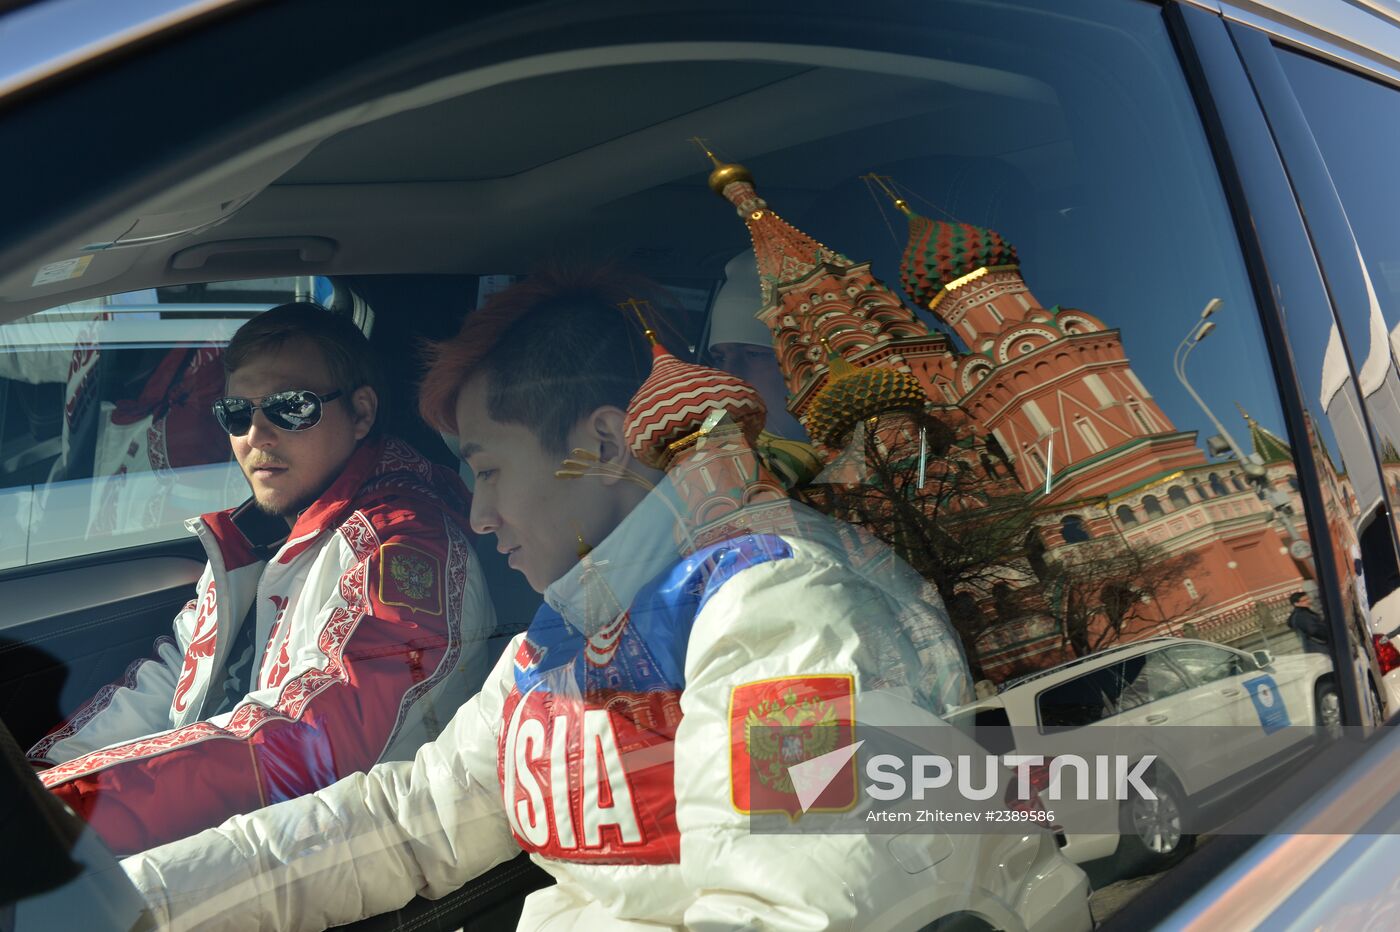 Sochi Olympics medalists awarded automobiles